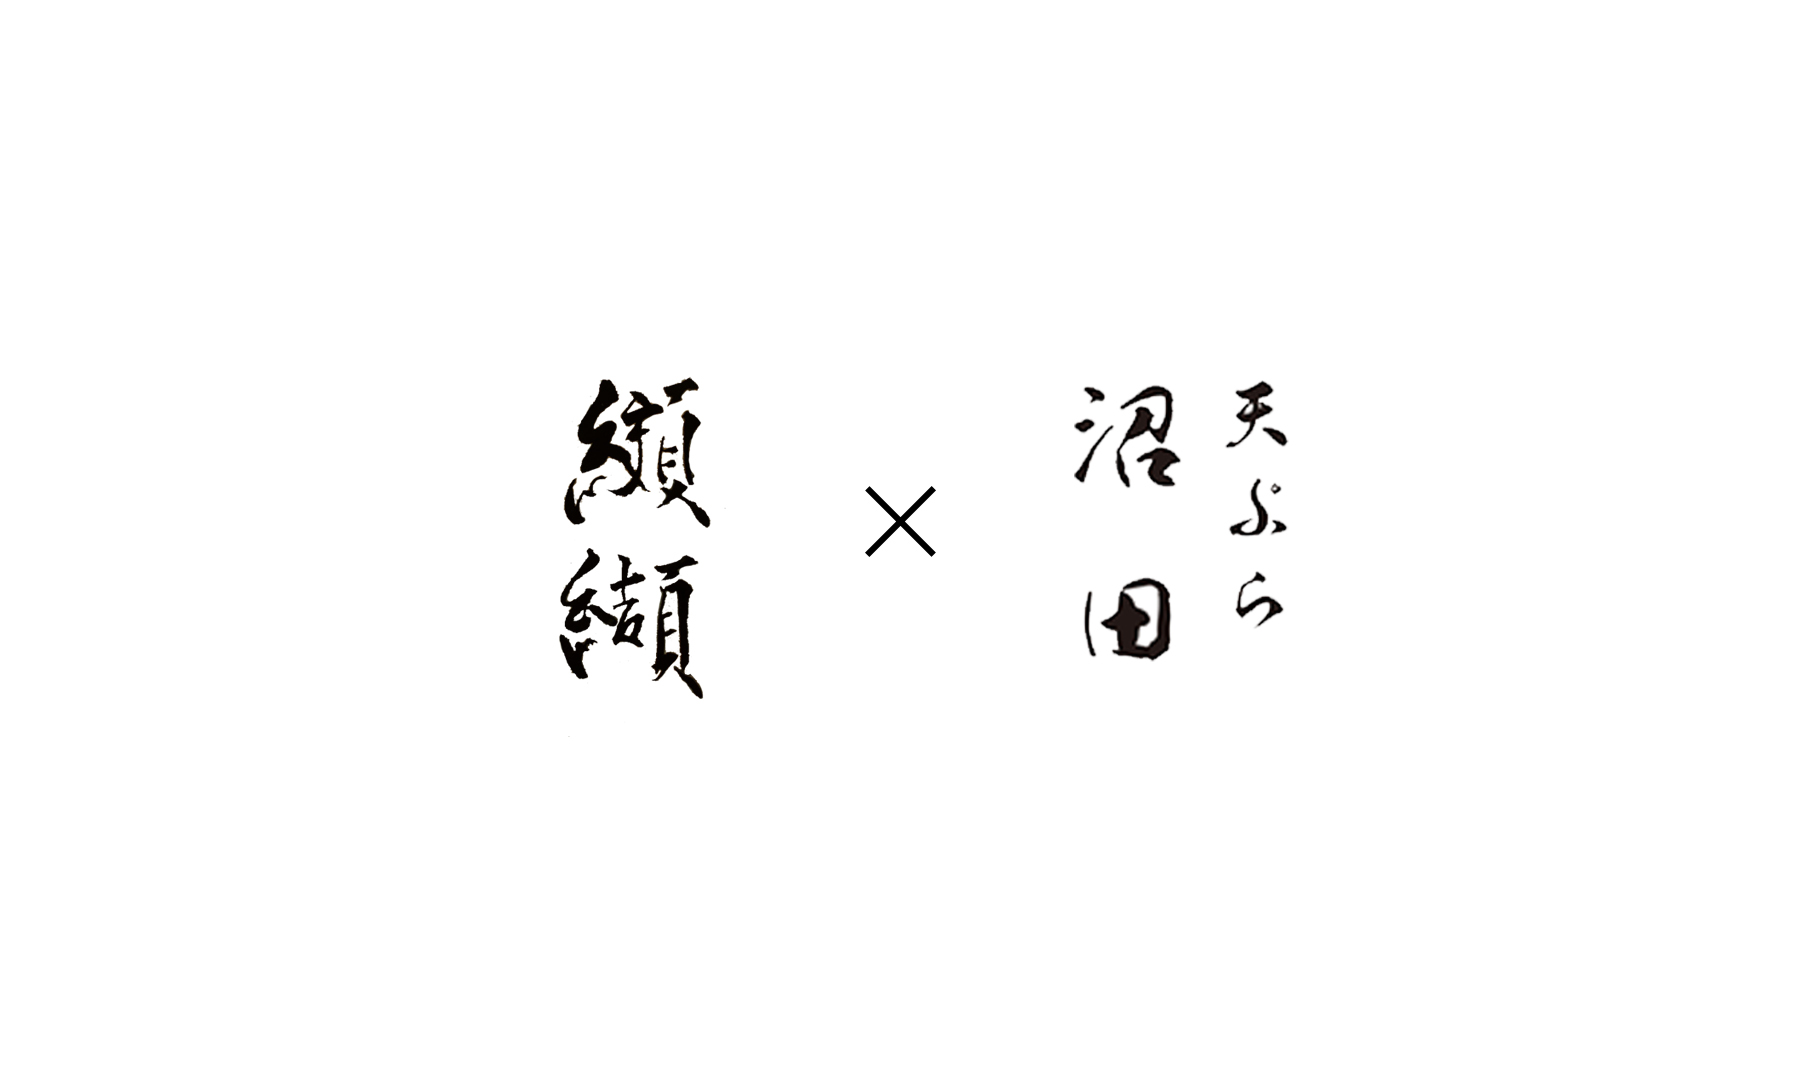 Kouketsu × Numata (Takeaway)　's image